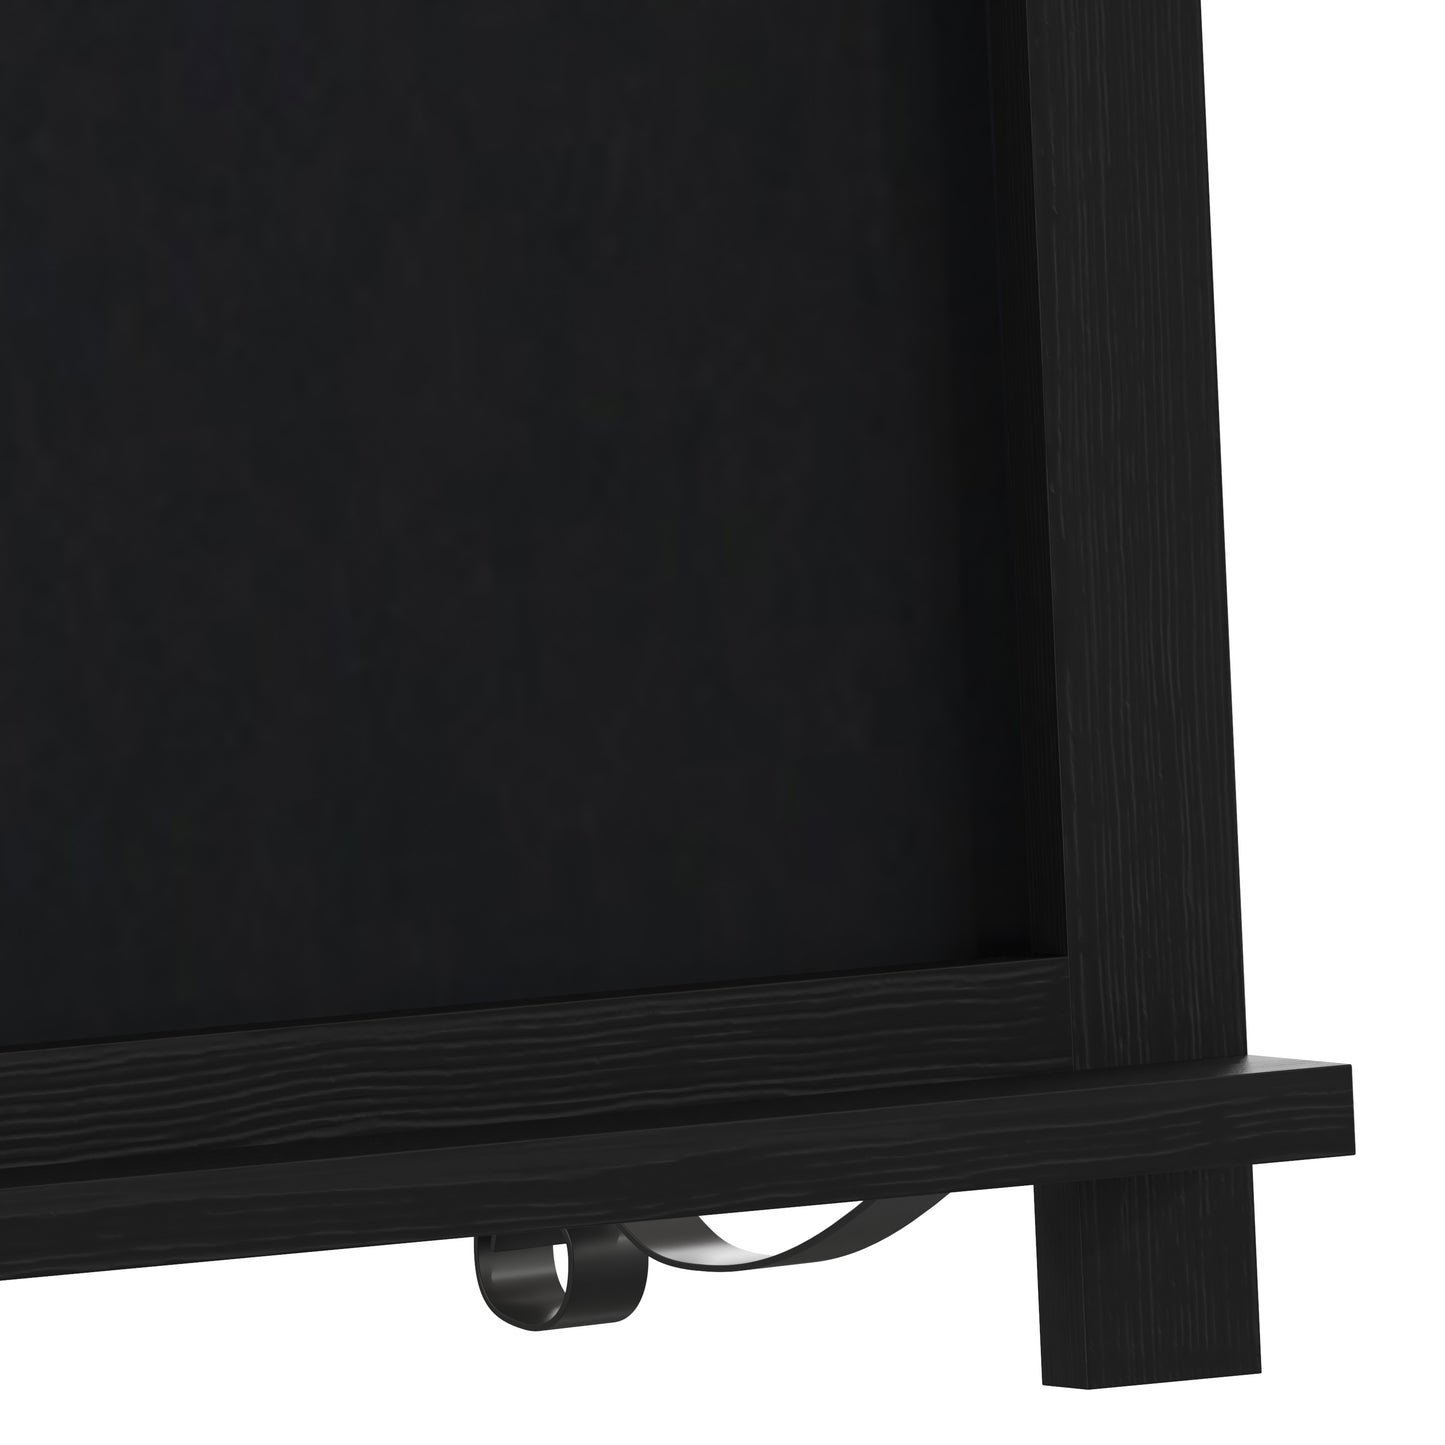 10PK Black Chalkboards 10-HFKHD-GDIS-CRE8-722315-GG